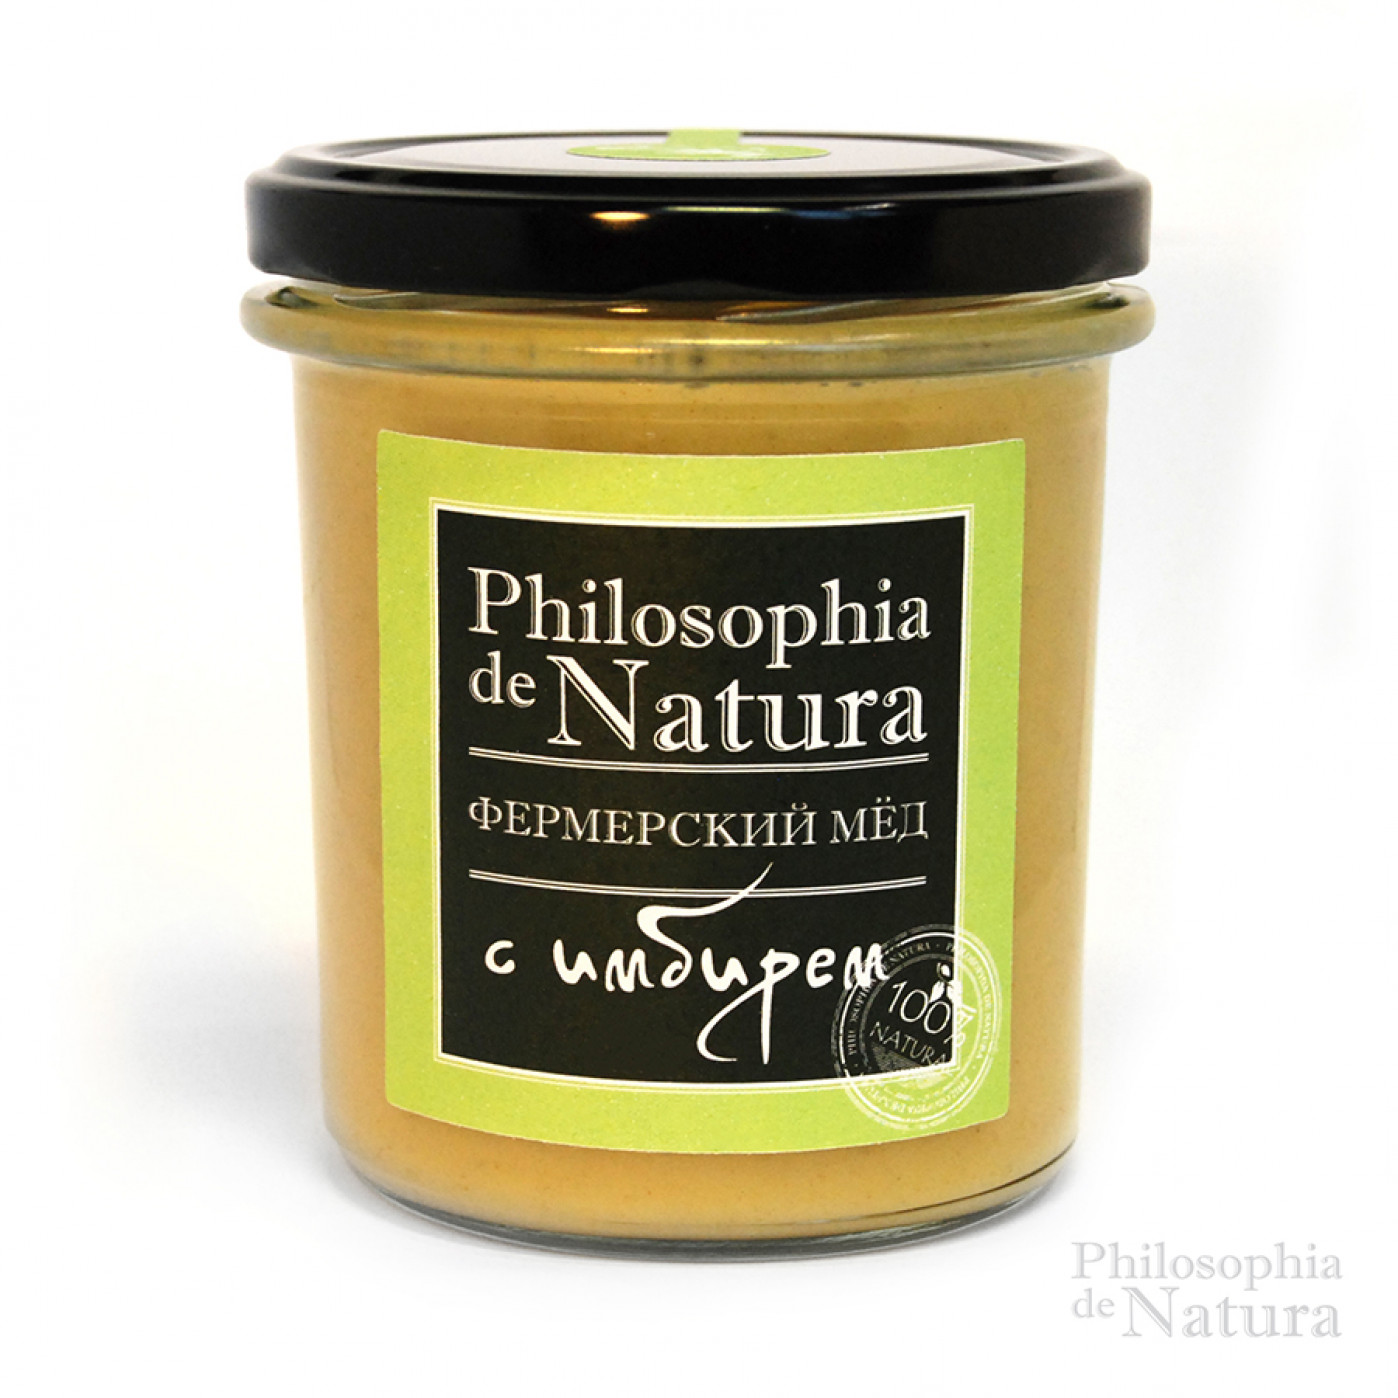 Фермерский мед с имбирем Philosophiya de natura. 180 гр